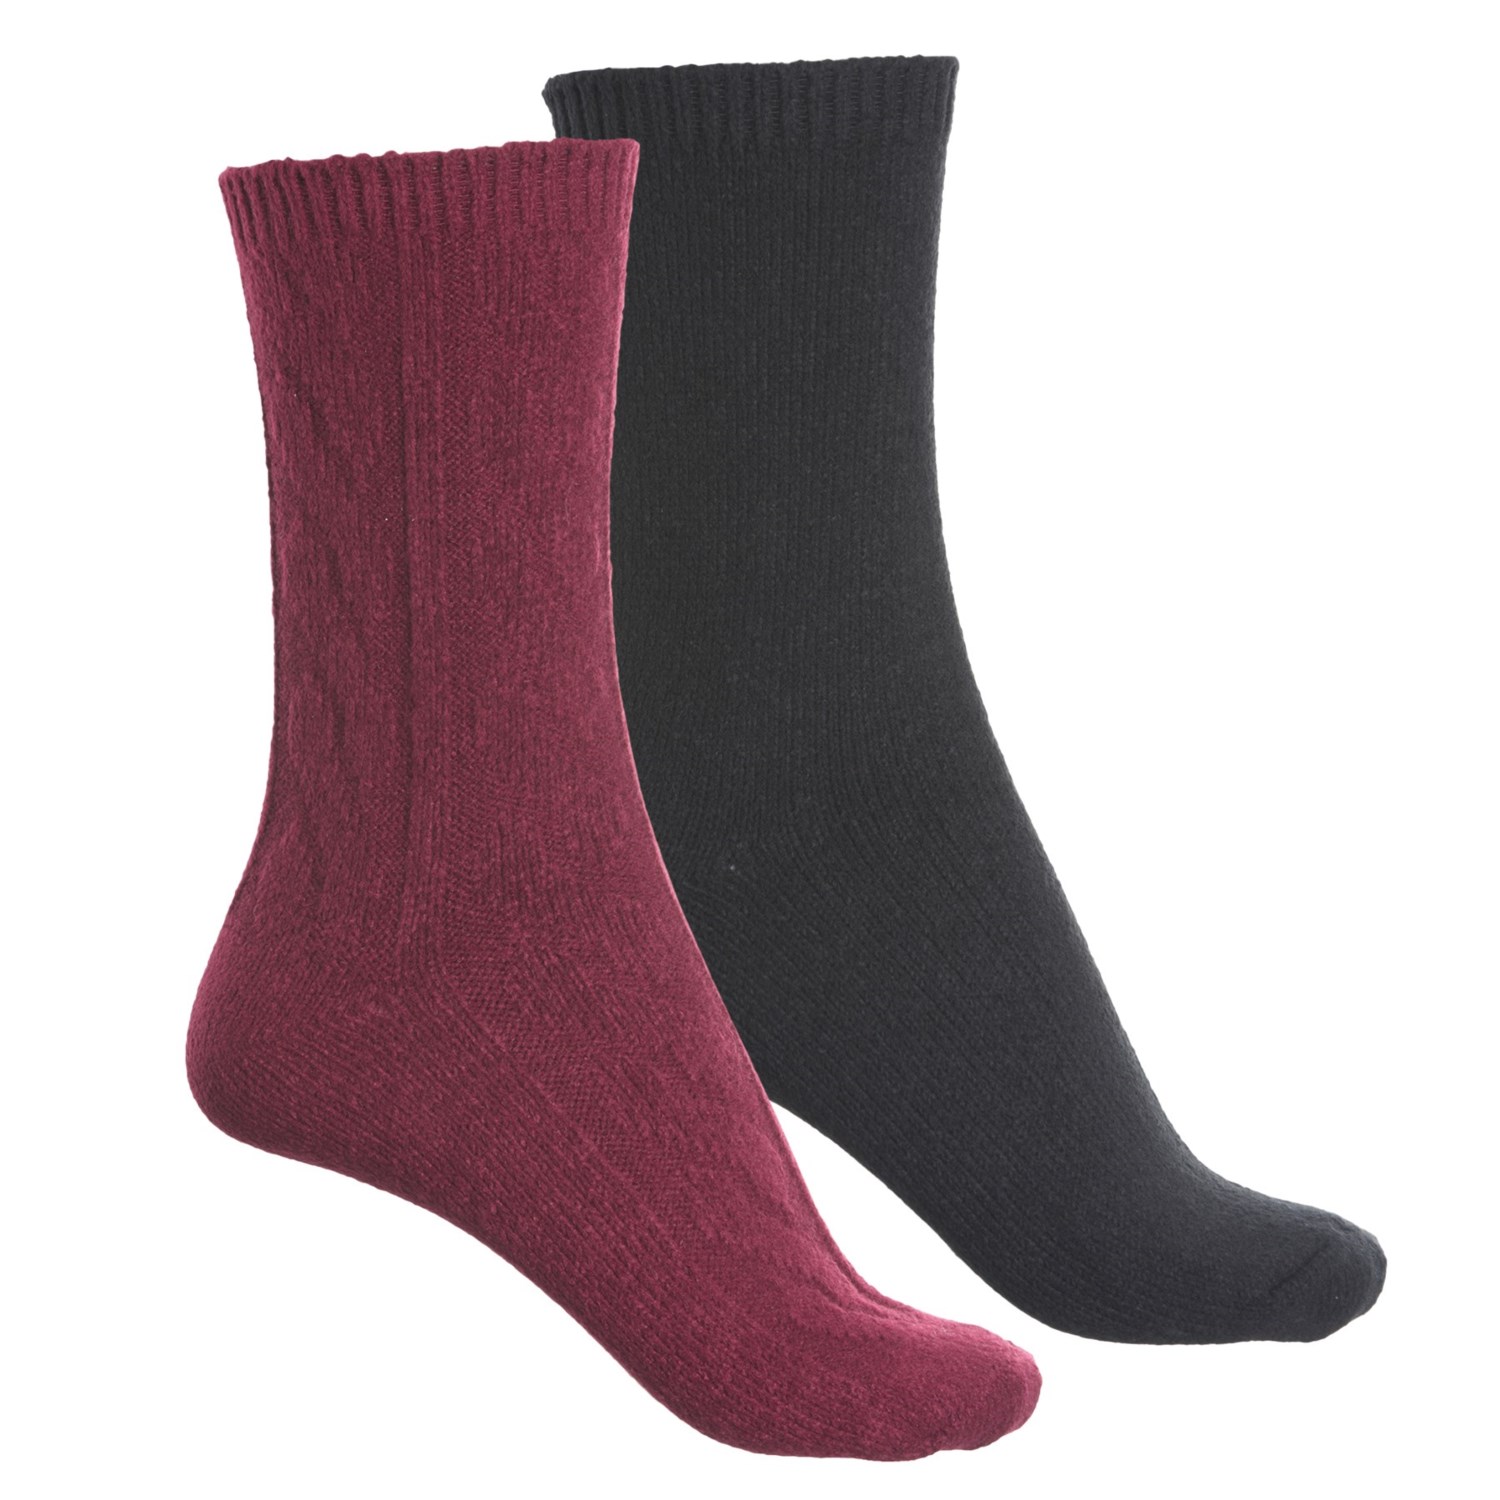 Tahari Cable-Knit Super Soft Boot Socks 